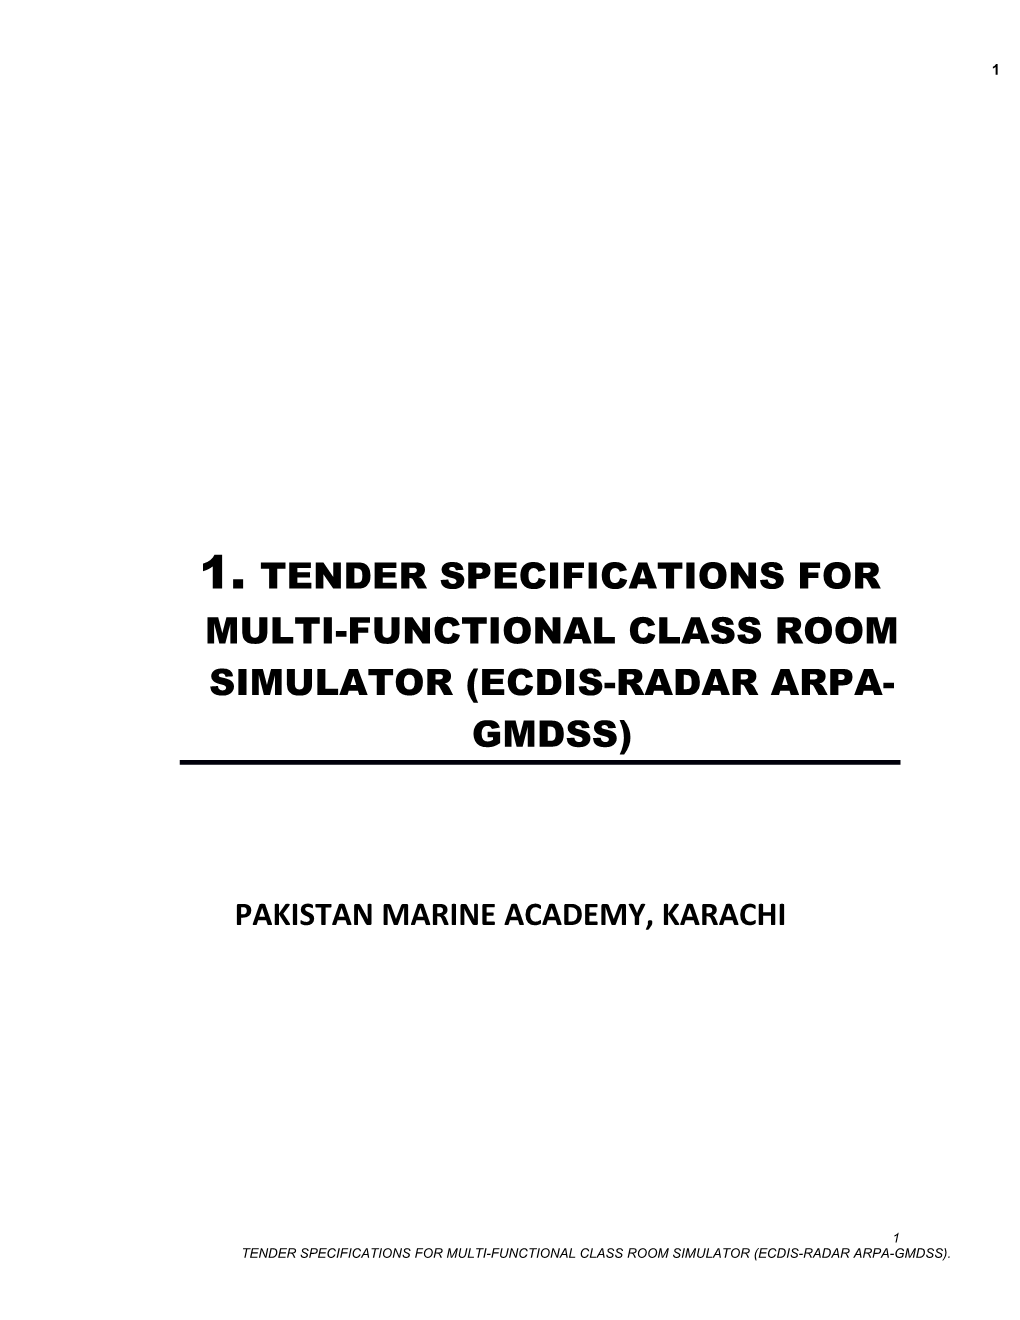 Tender Specifications for Multi-Functional Class Room Simulator (Ecdis-Radar Arpa-Gmdss)